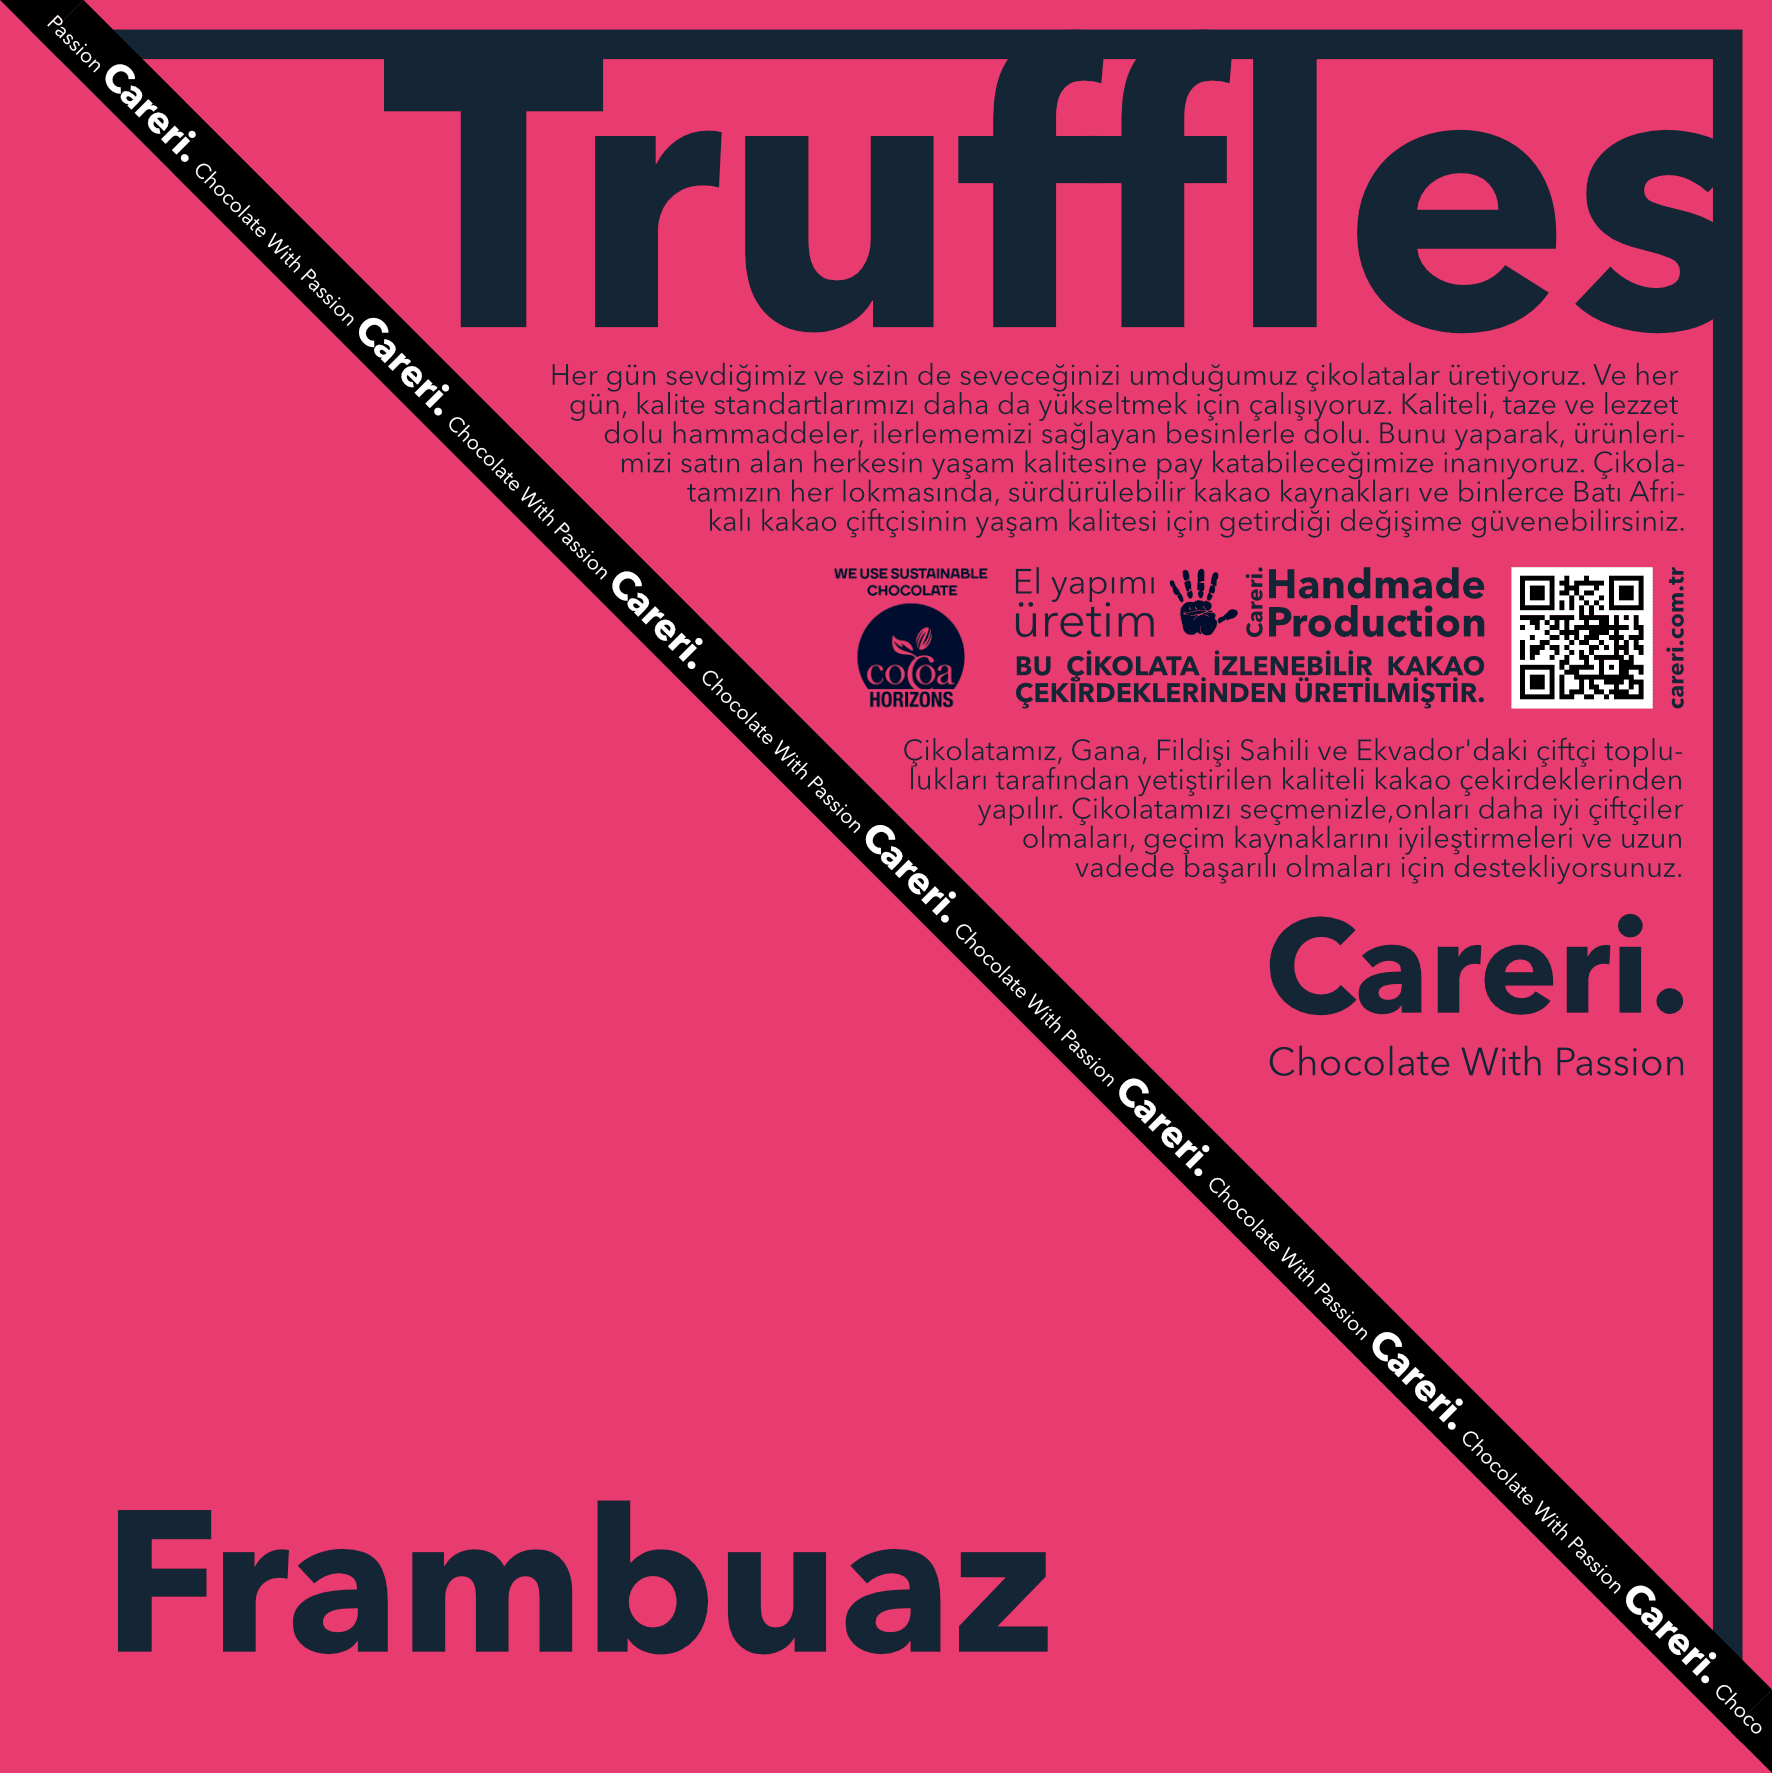 Truffles Frambuaz